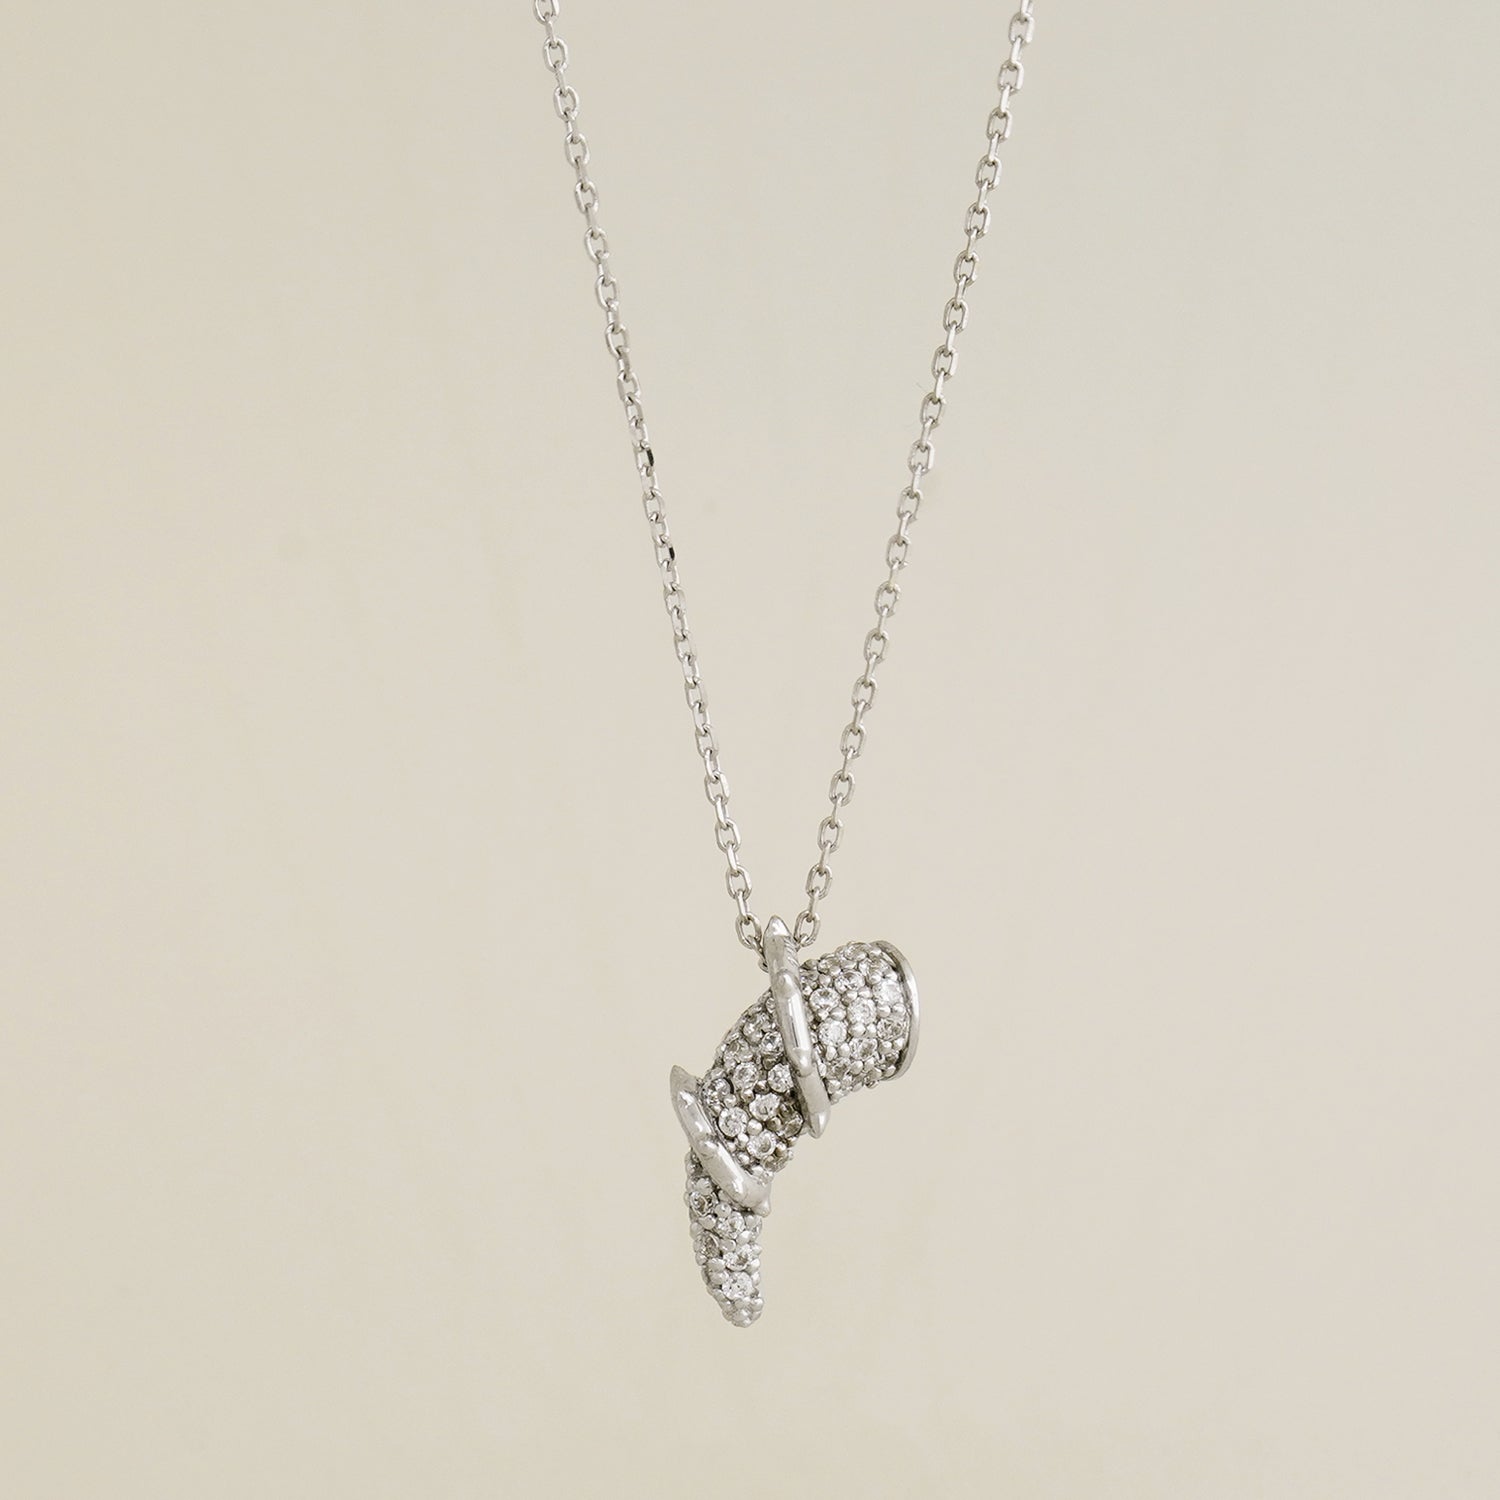 Horn Pendant Chain Necklace Online